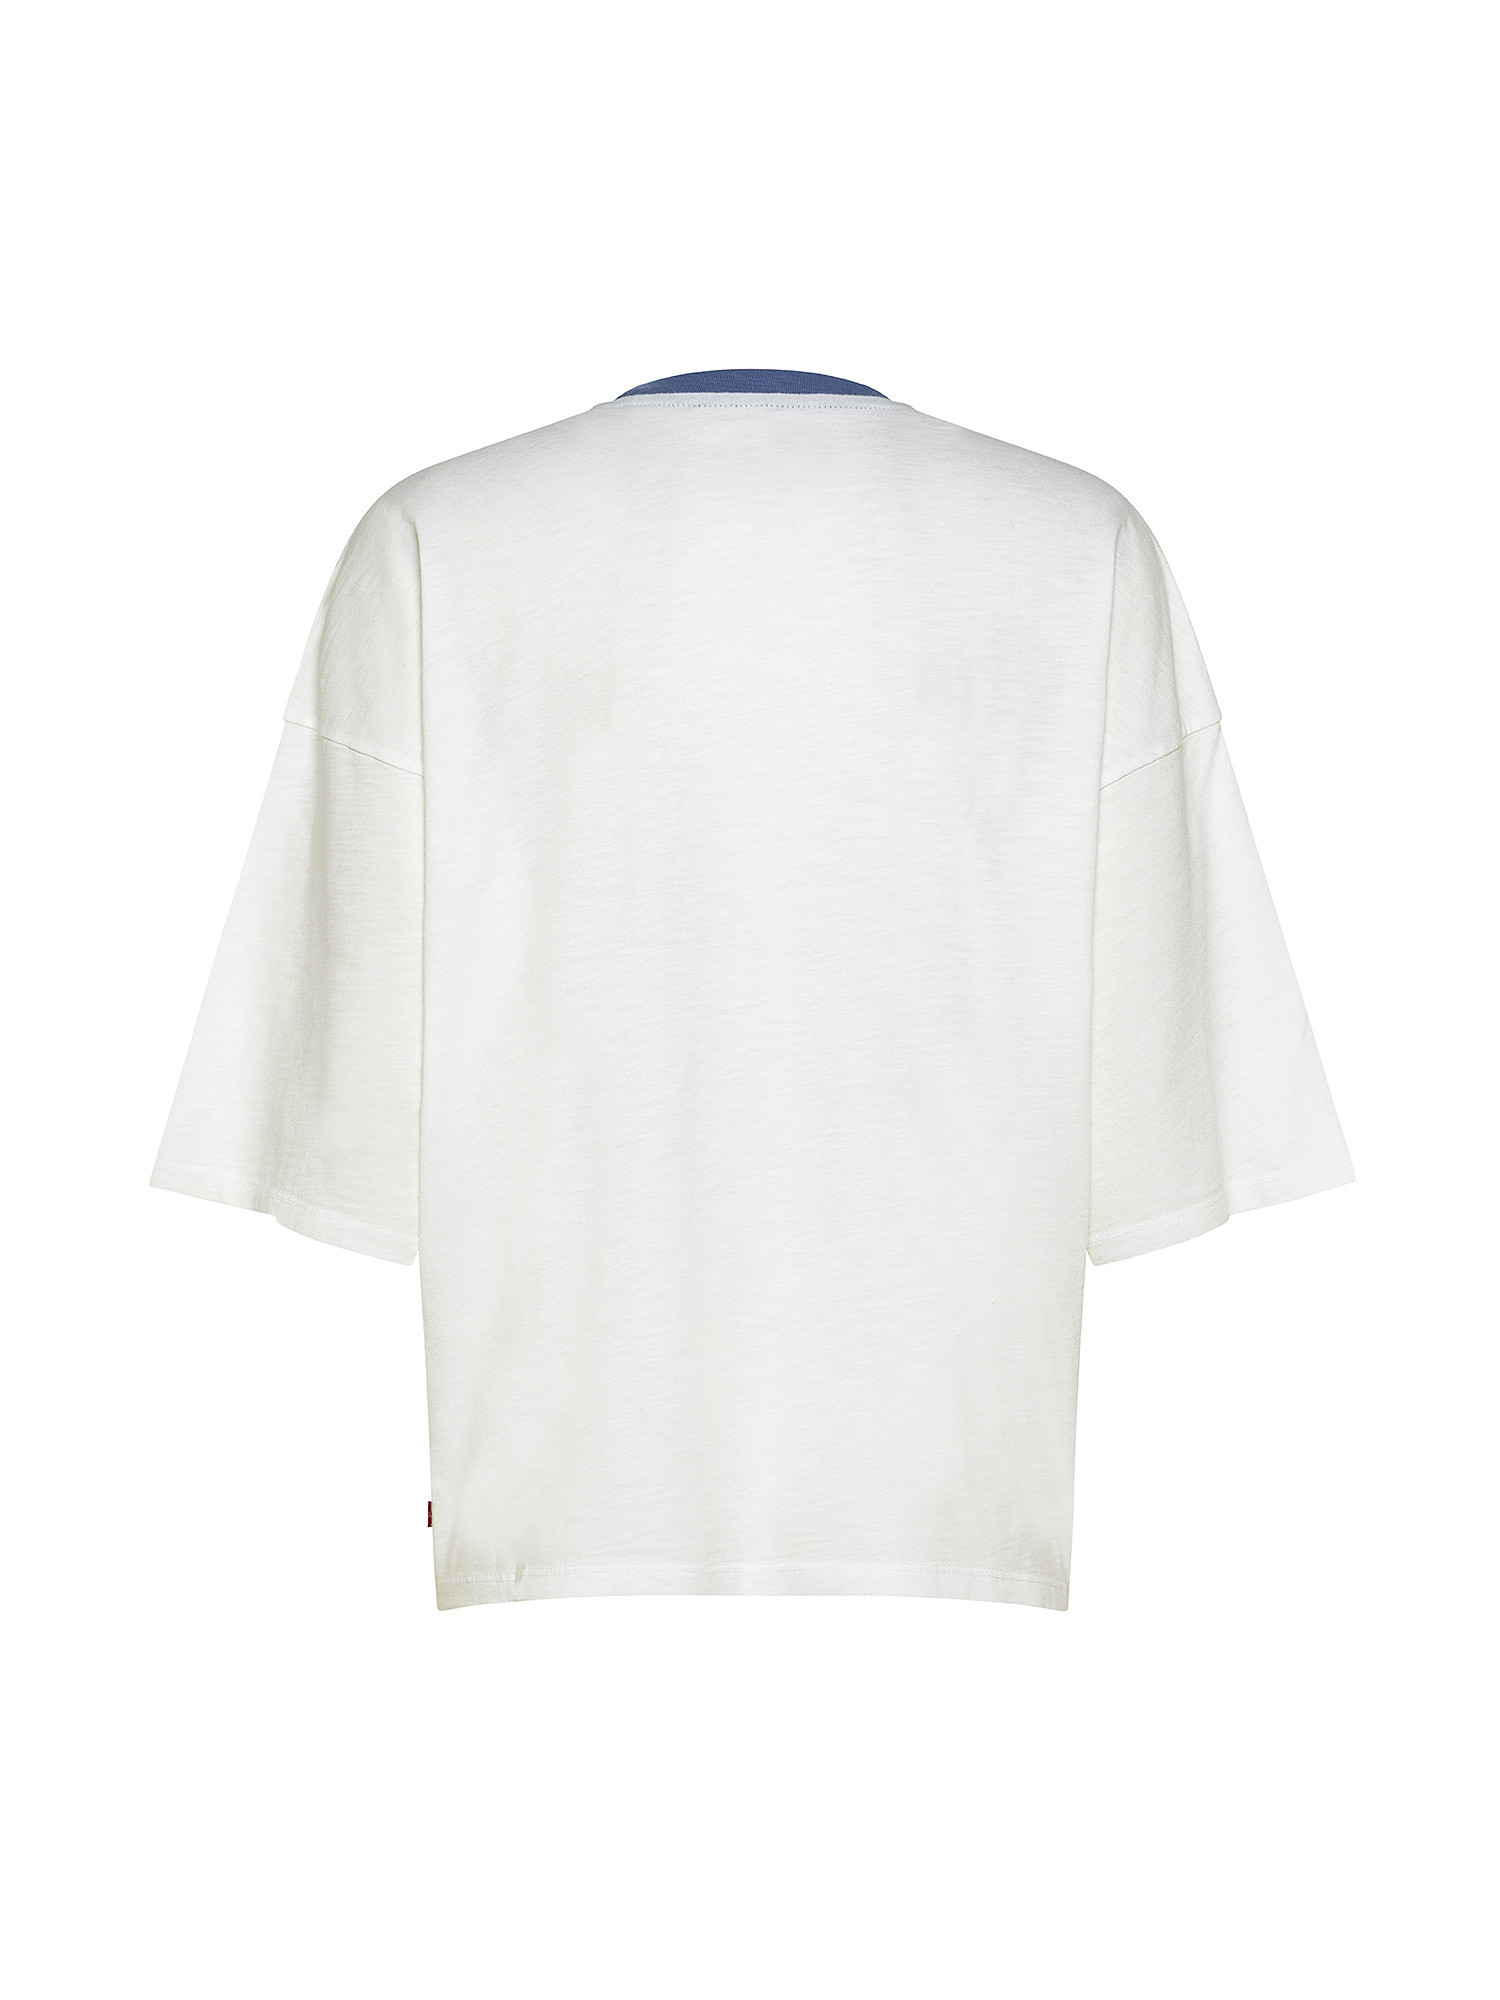 T-shirt Graphic Drapey Tee, Bianco, large image number 1